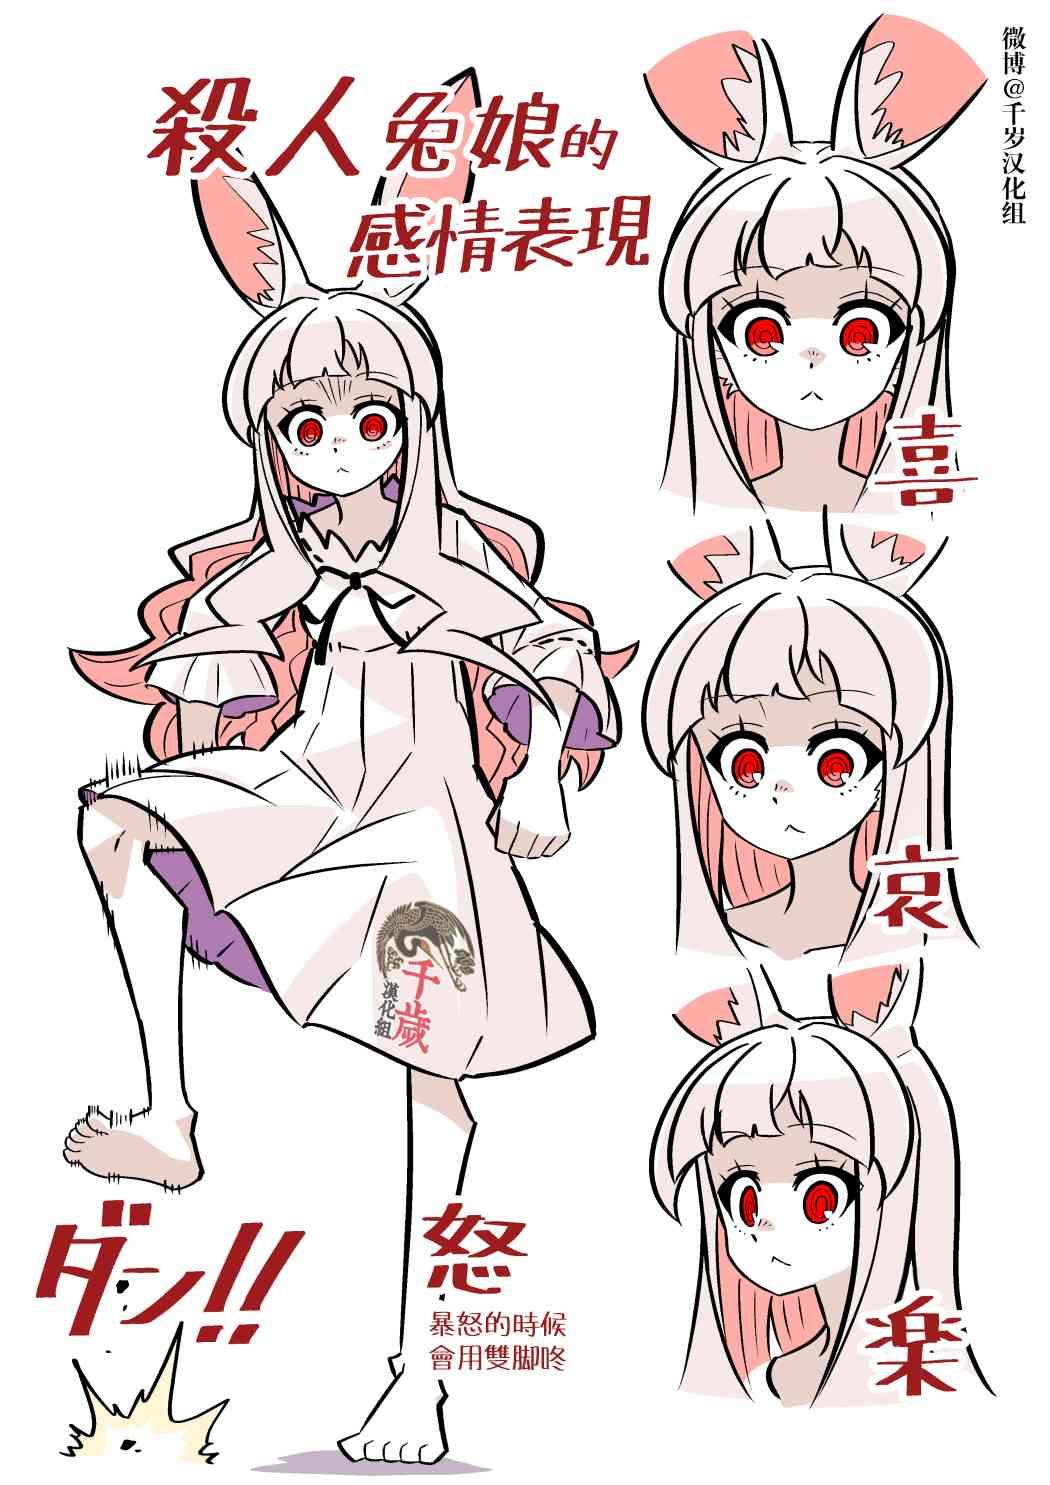 Murder Rabbit Girl vs Series 杀人兔娘 38